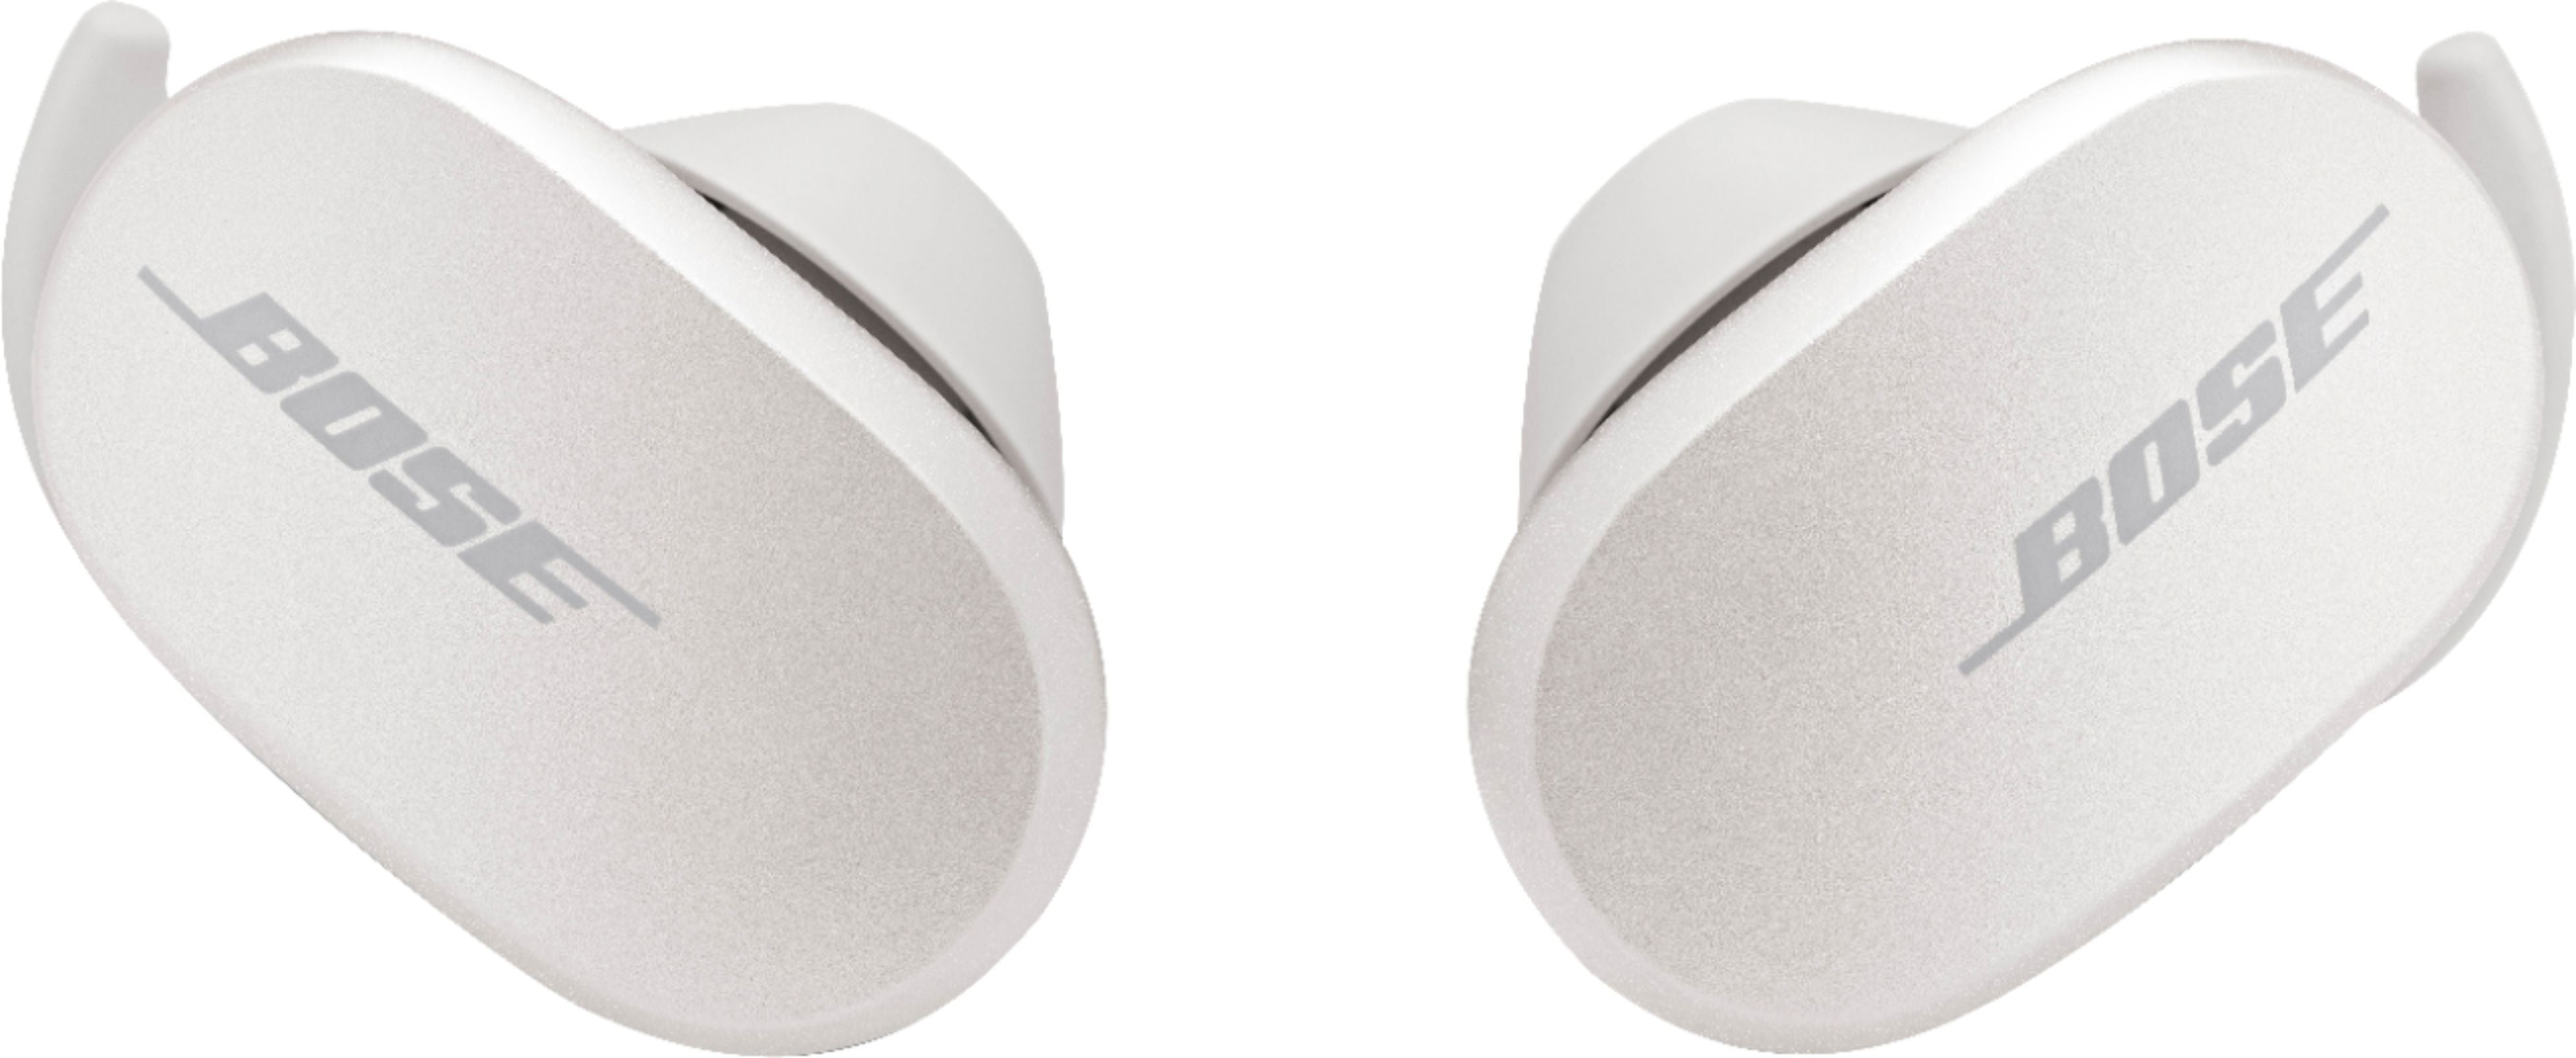 Bose Quiet Comfort Earbuds True Wireless Noise Cancelling Earphones Bl